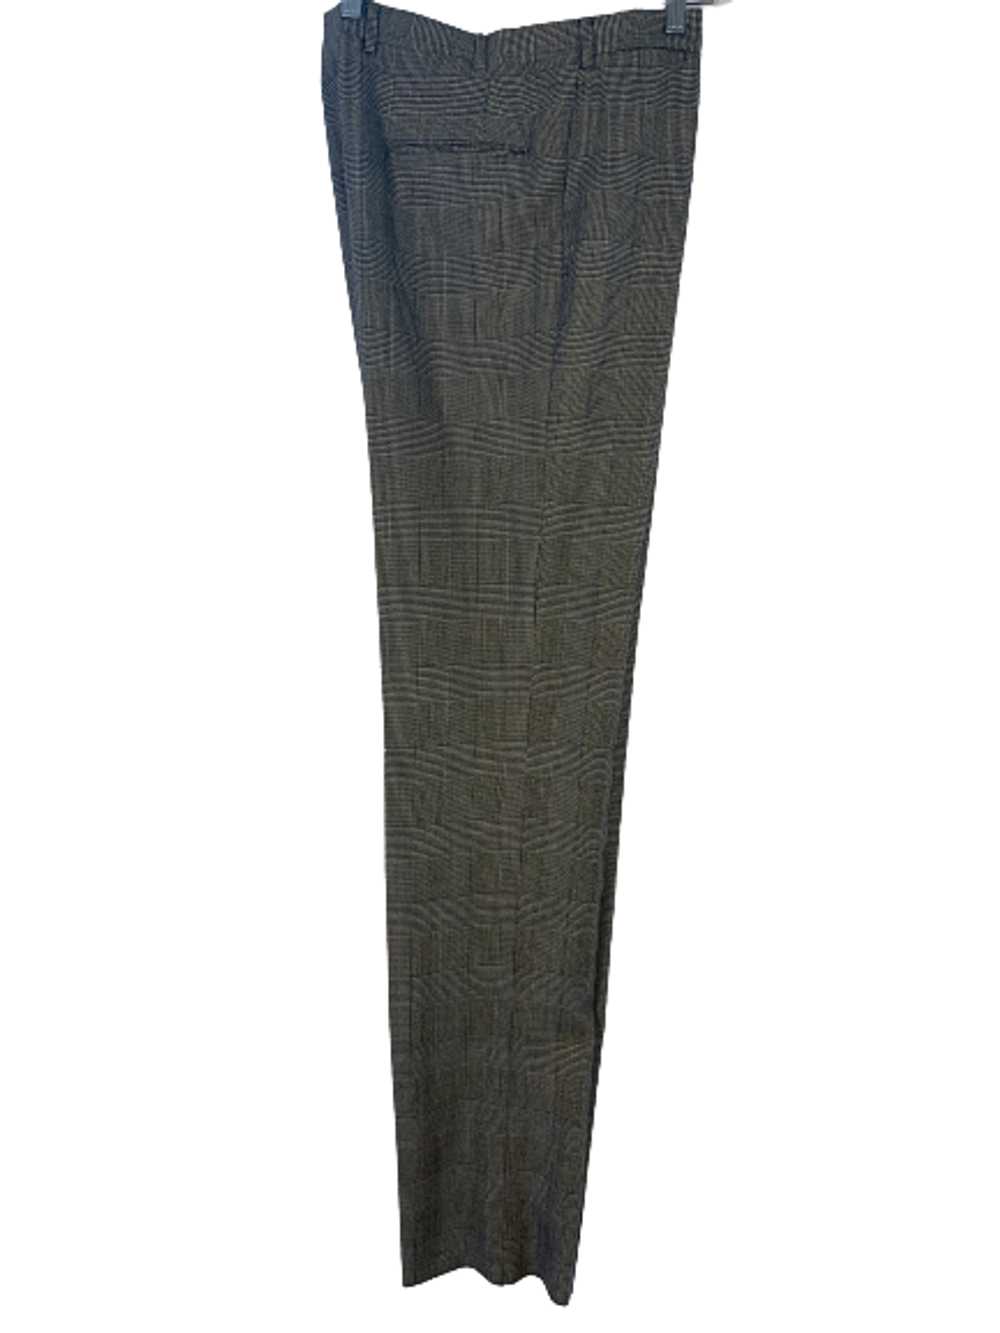 1960s Men’s Deadstock Herringbone Wool Trousers - image 3